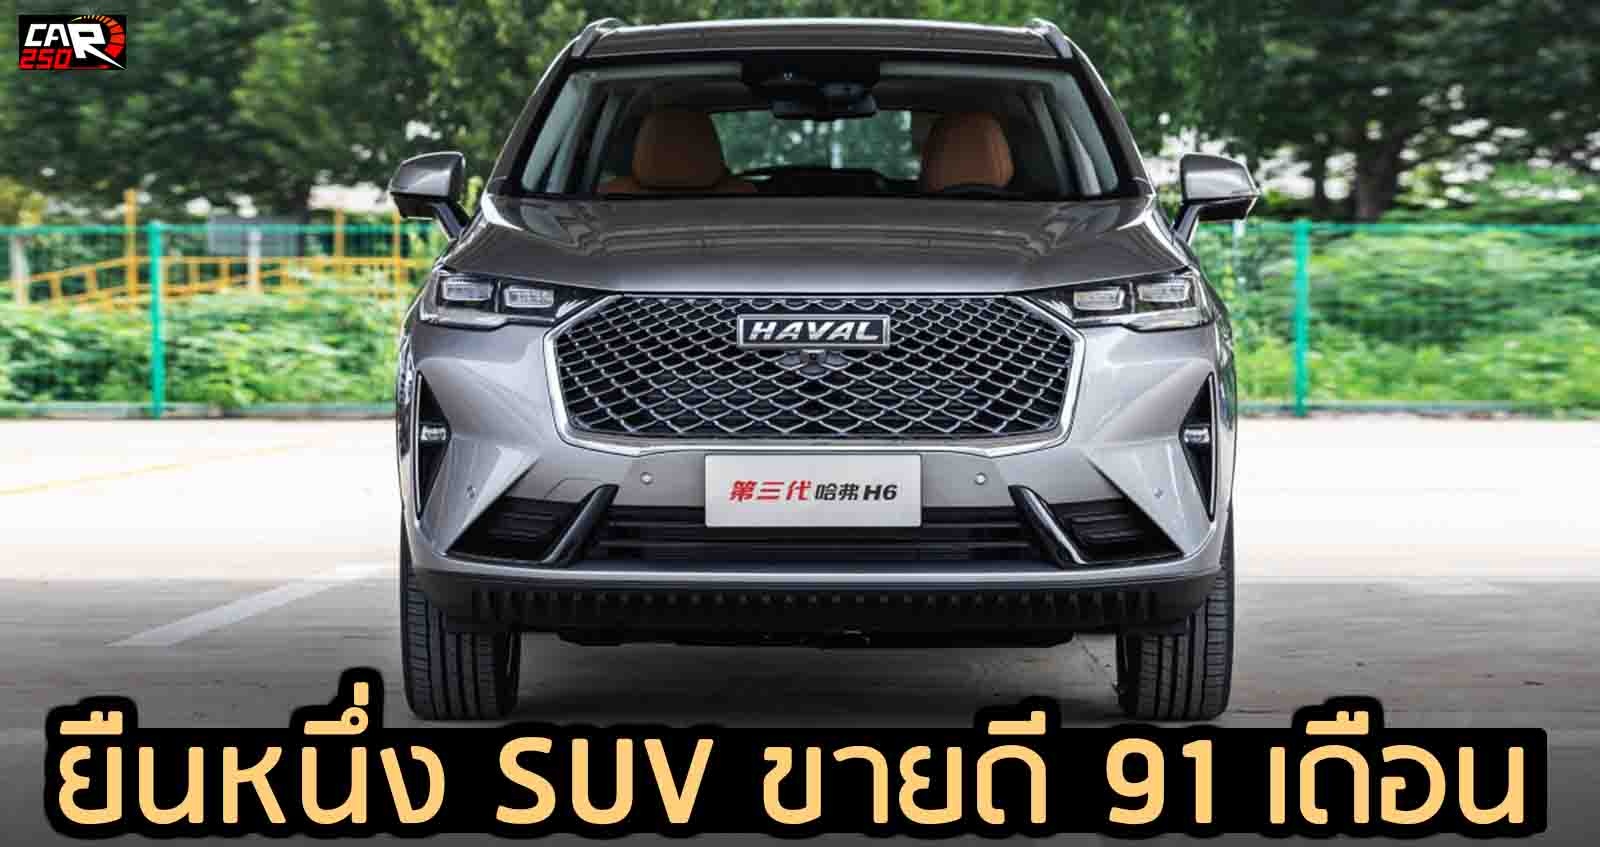 HAVAL H6 ปิดยอดขาย 55,632 คัน ธ.ค. ในจีน รั้ง SUV ขายดีติดต่อ 91 เดือน